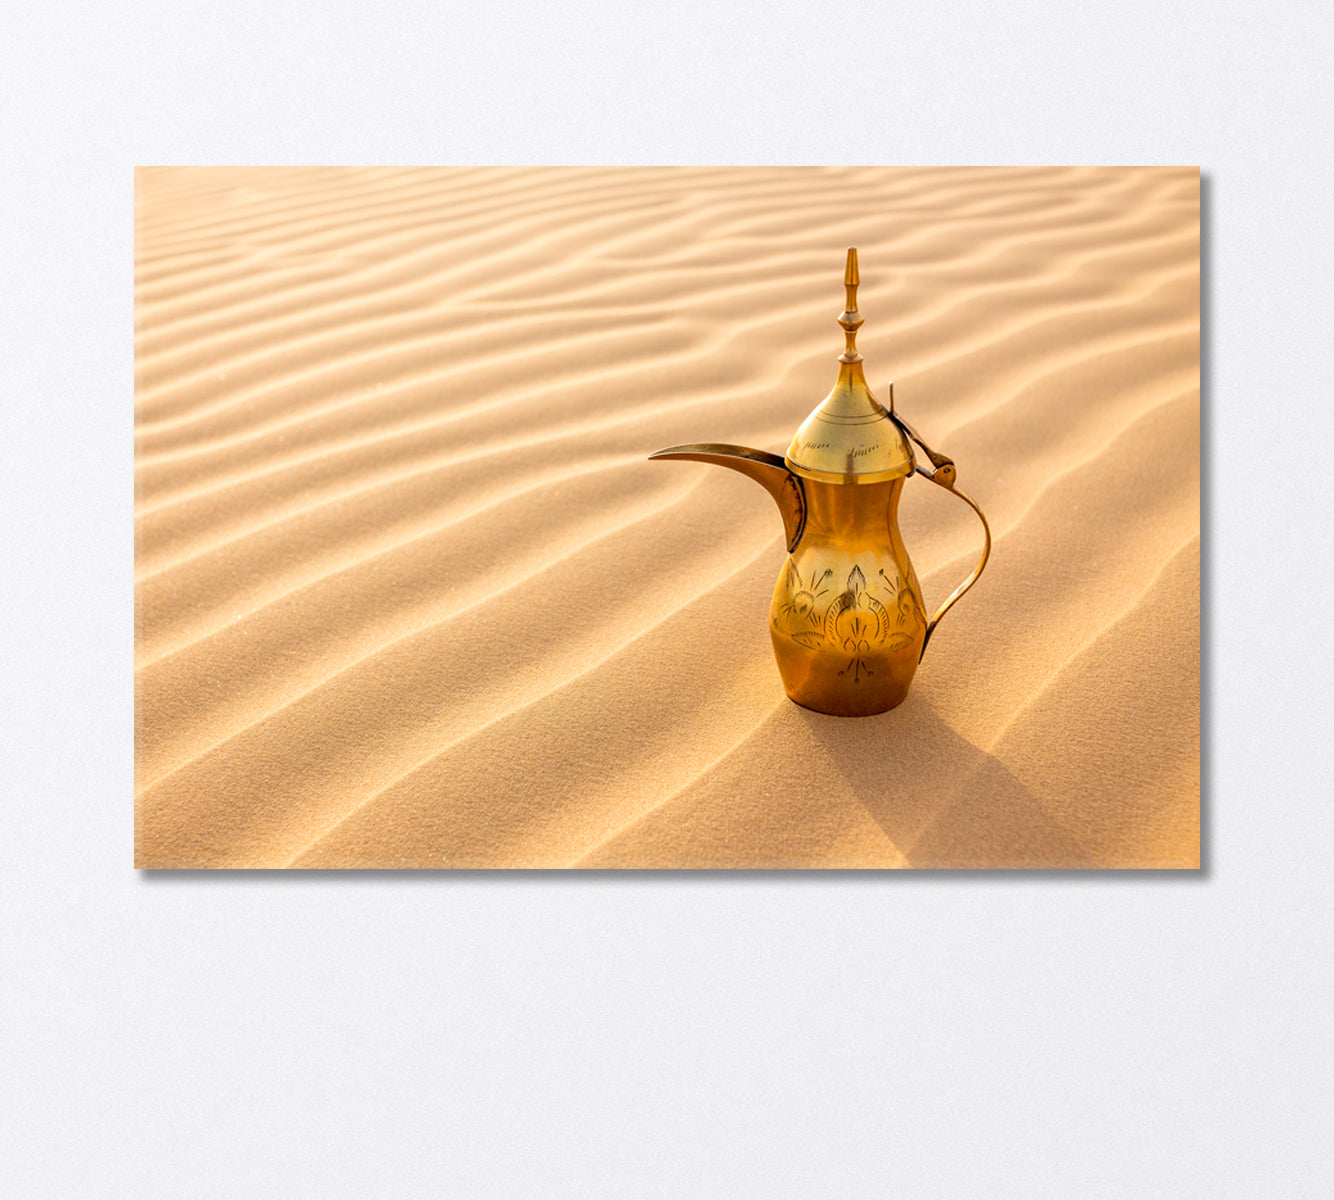 Vintage Arabic Teapot in the Desert Canvas Print-Canvas Print-CetArt-1 Panel-24x16 inches-CetArt